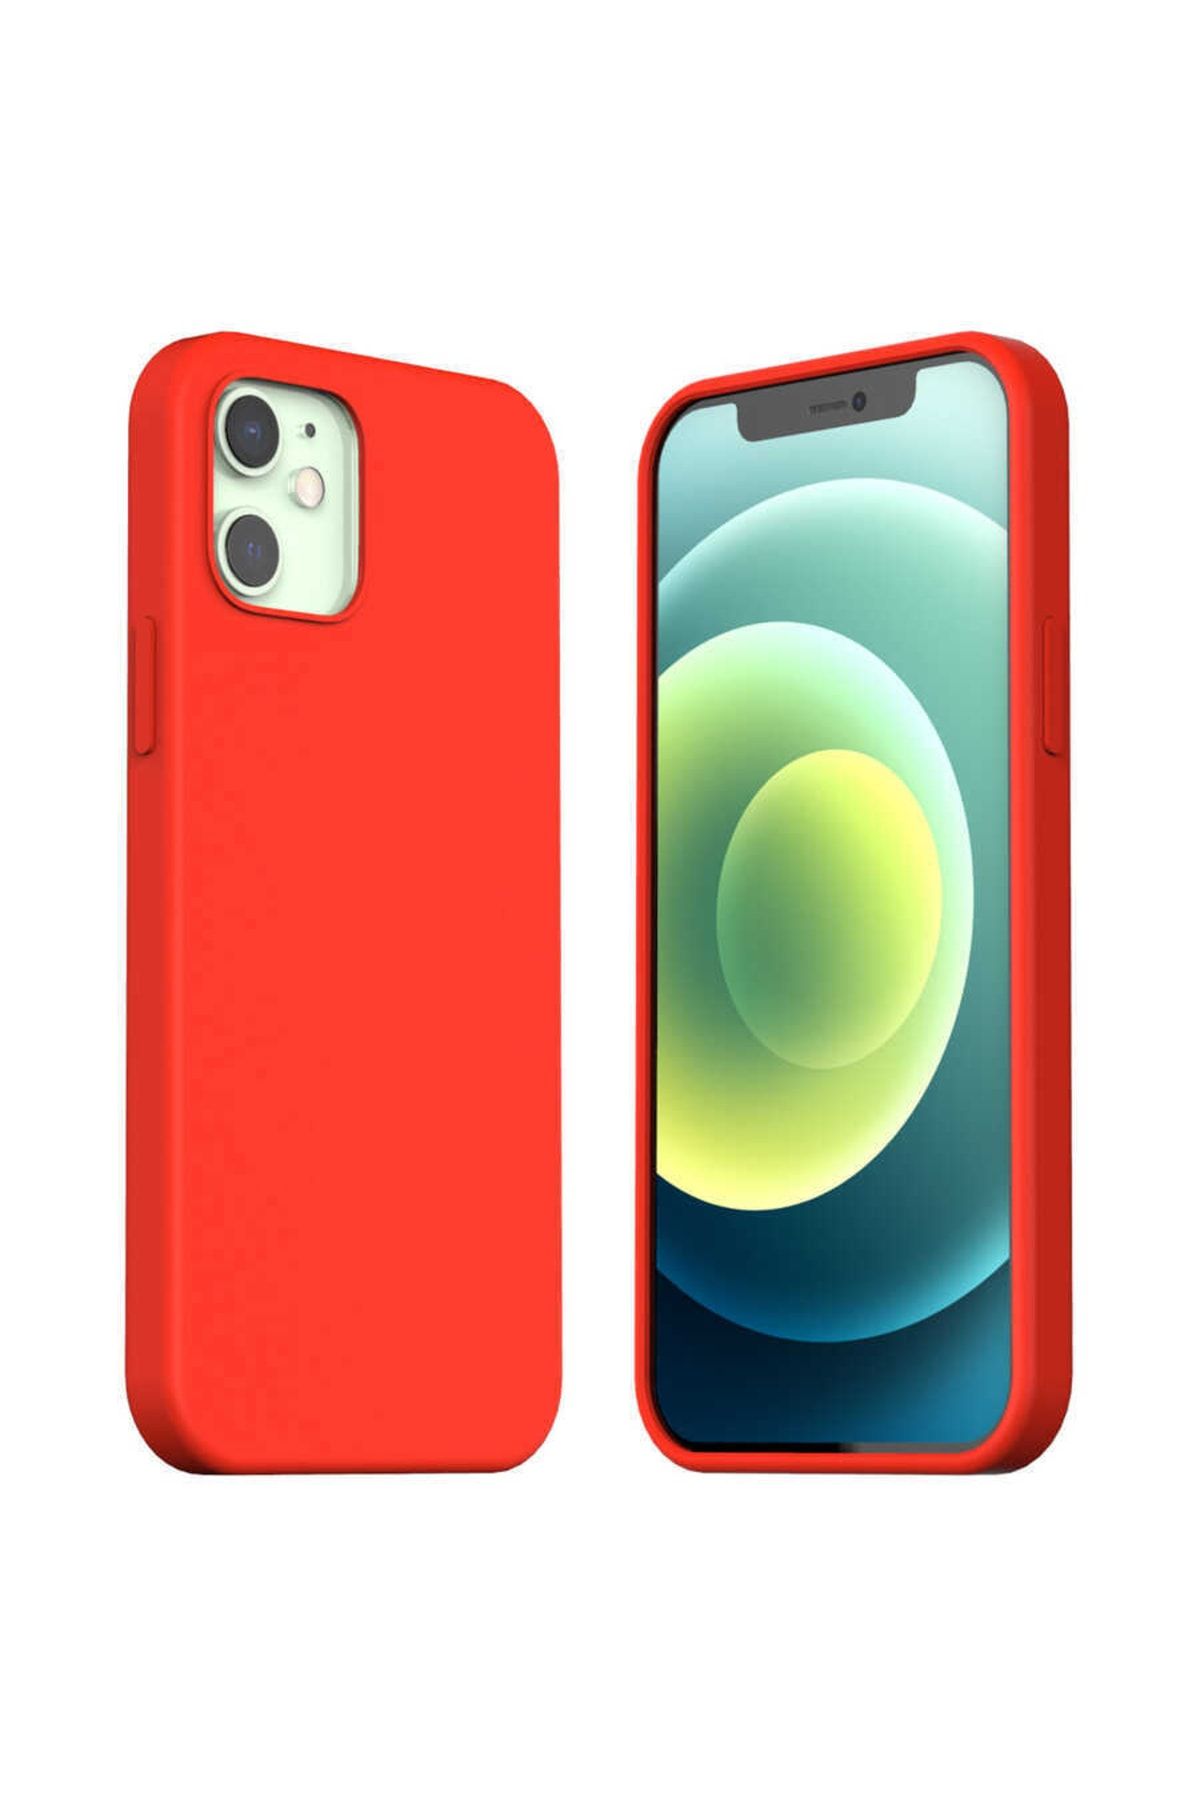 Araree Iphone 12 Kılıf Renkli Silikon Kılıf Typo Skin Kapak